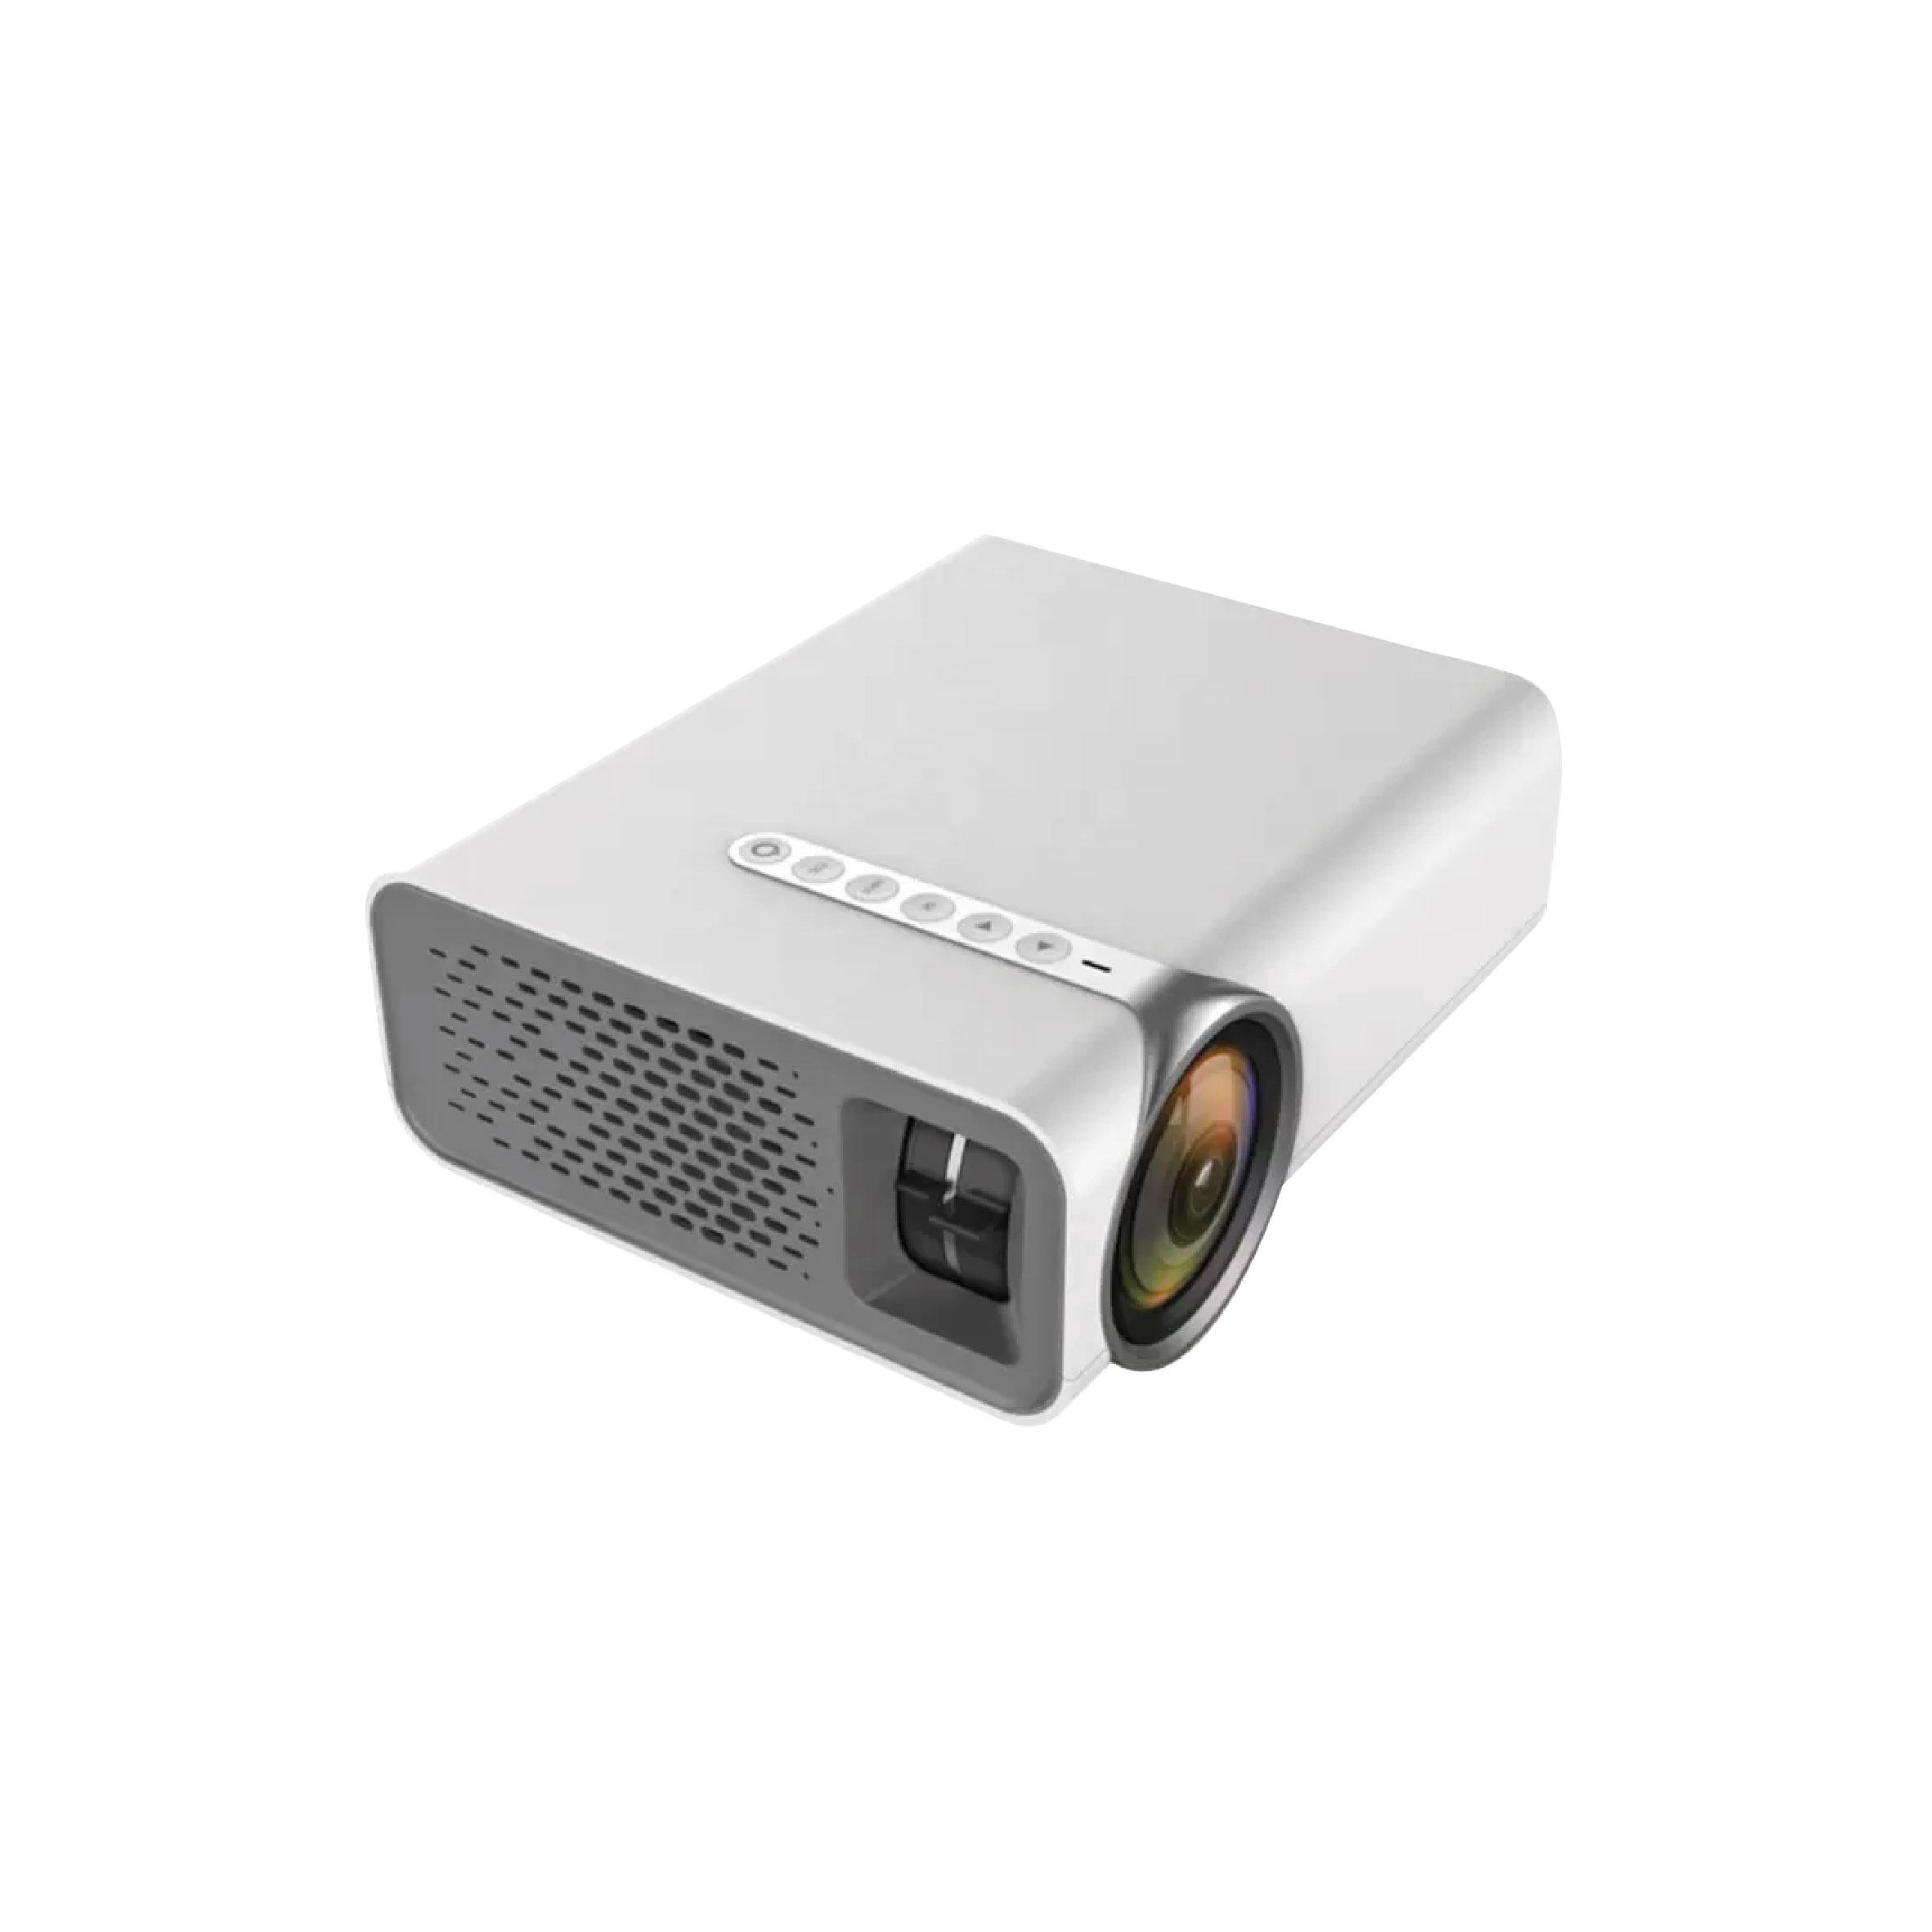 Projector LED TFT LCD, 1024x600, 1920x1080, F=125 Lens, USB, HDMI, AV, VGA, SD, GY530